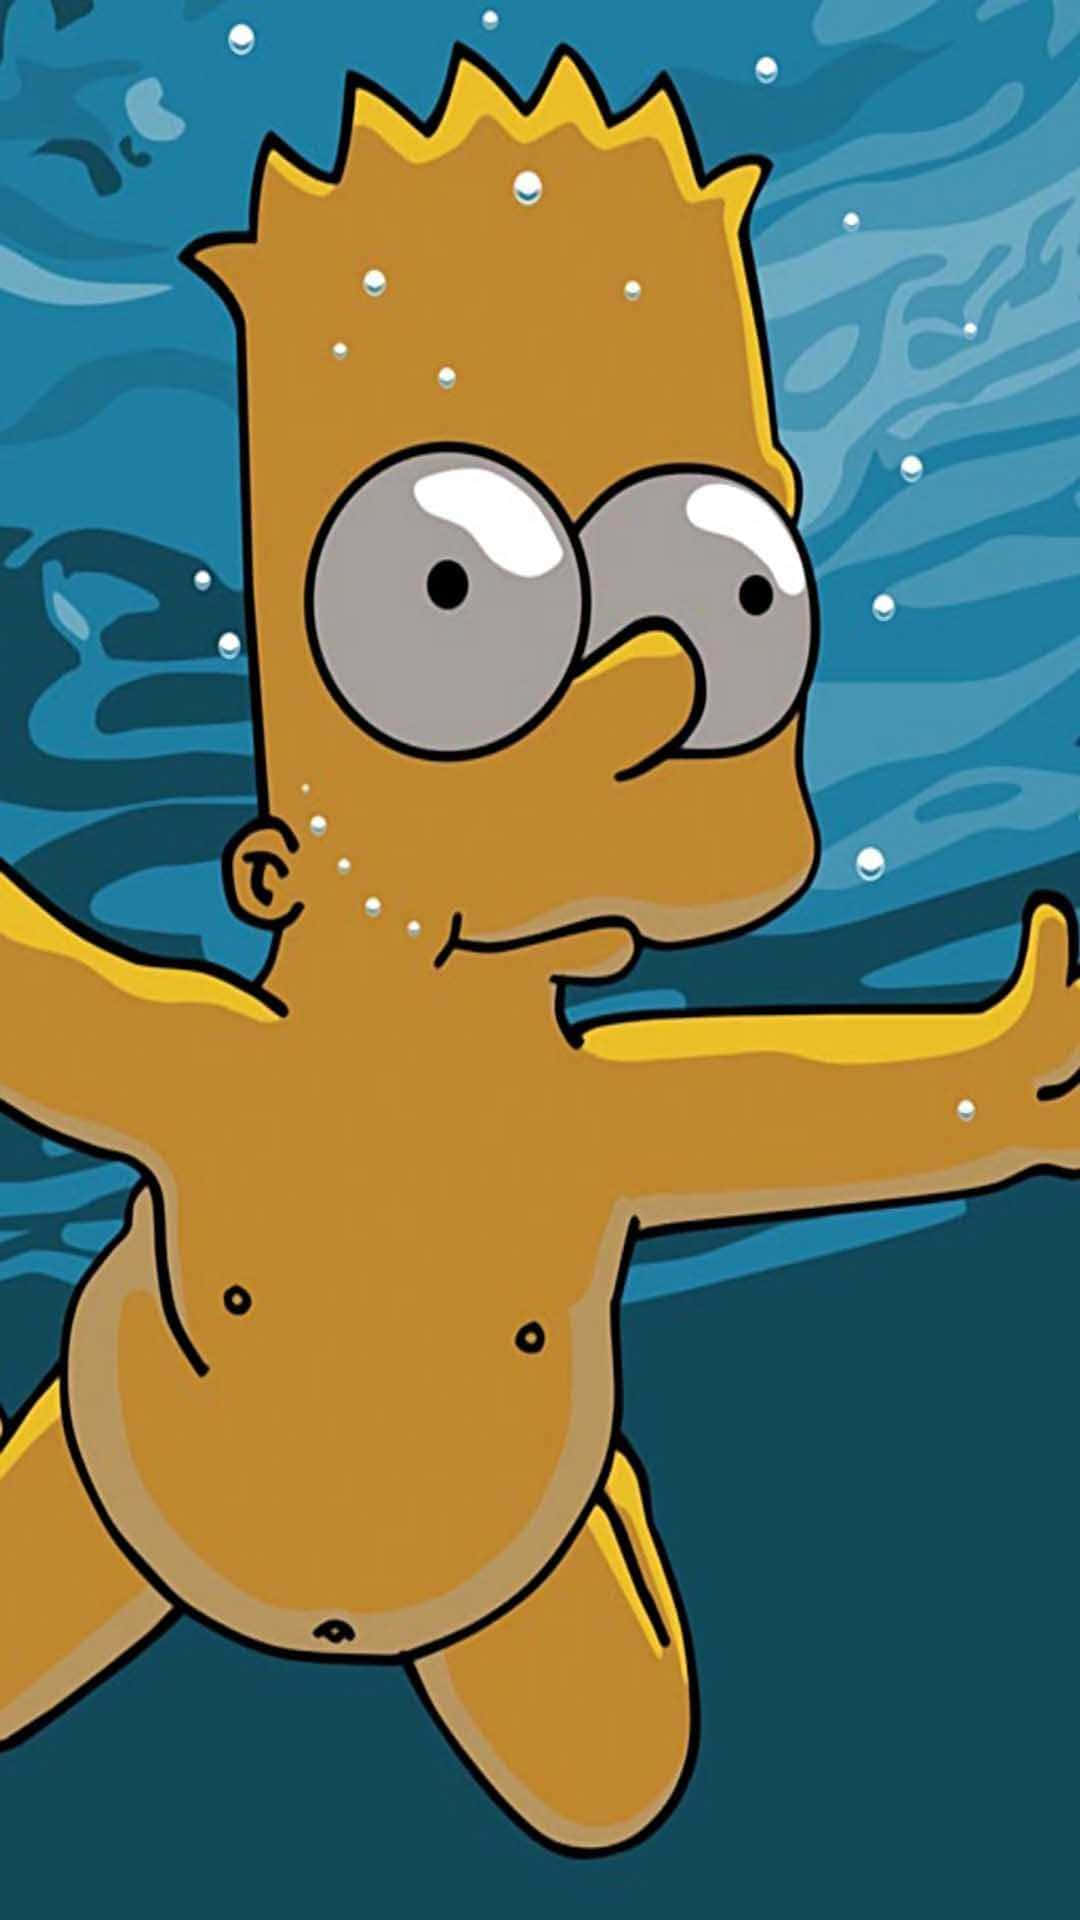 Bildeines Cartoon-charakters Namens Bart